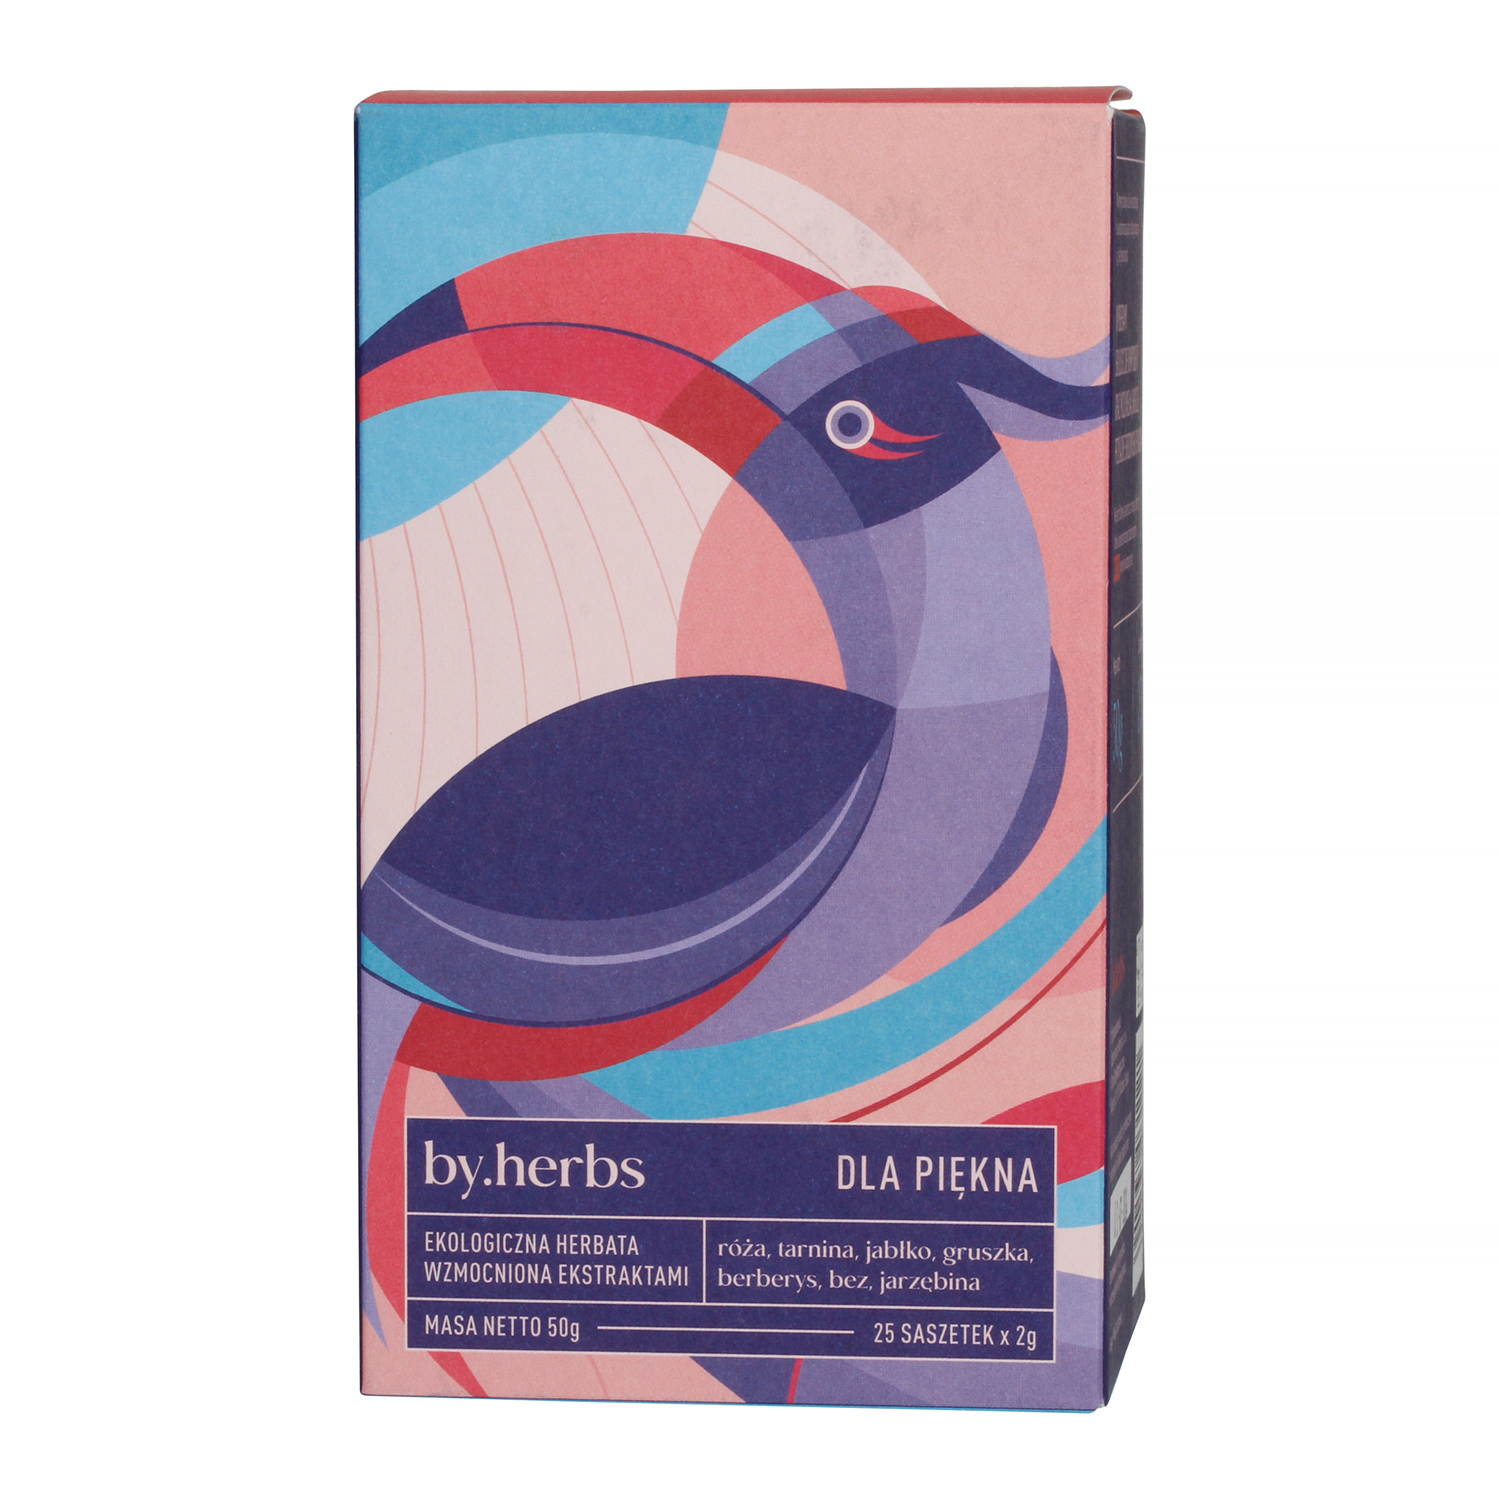 By.herbs - Dla Piękna - Herbal Infusion - 25 Tea Bags